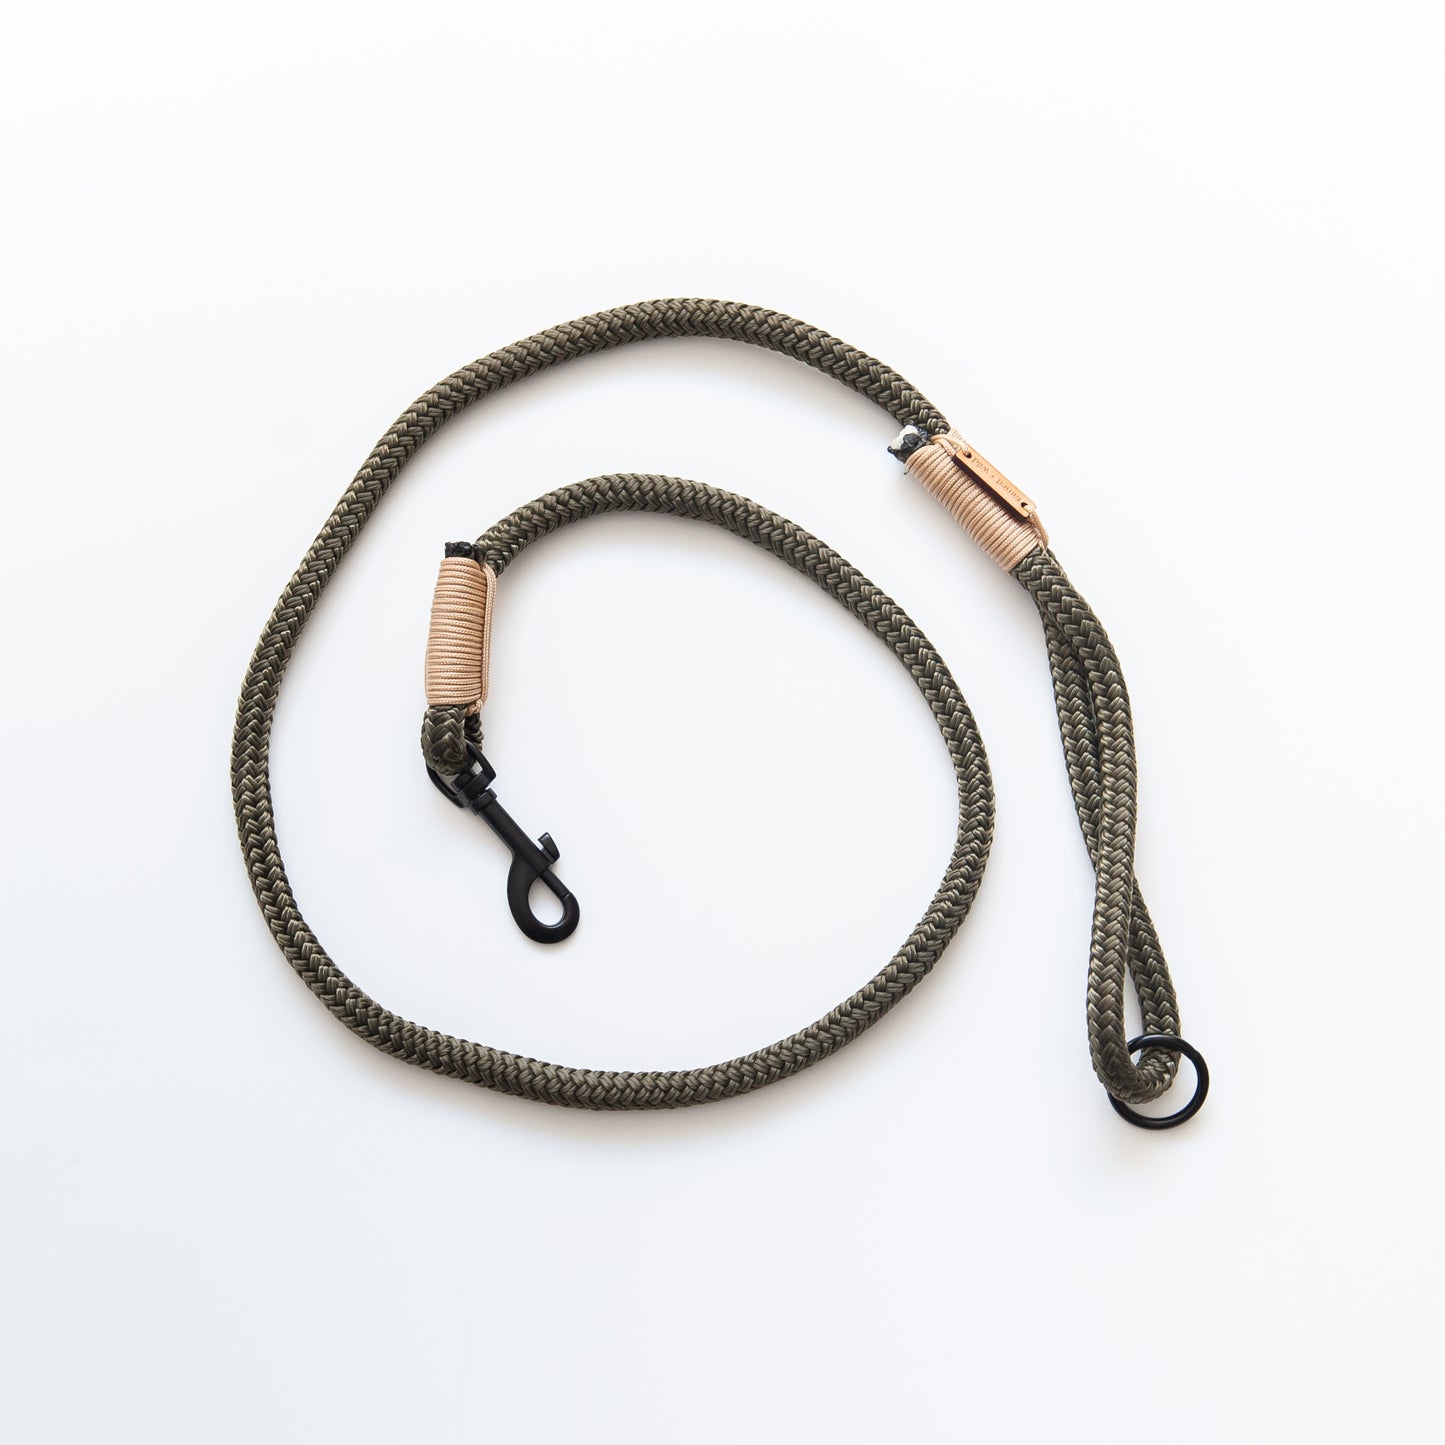 Olive & Tan Marine Rope Dog Leash